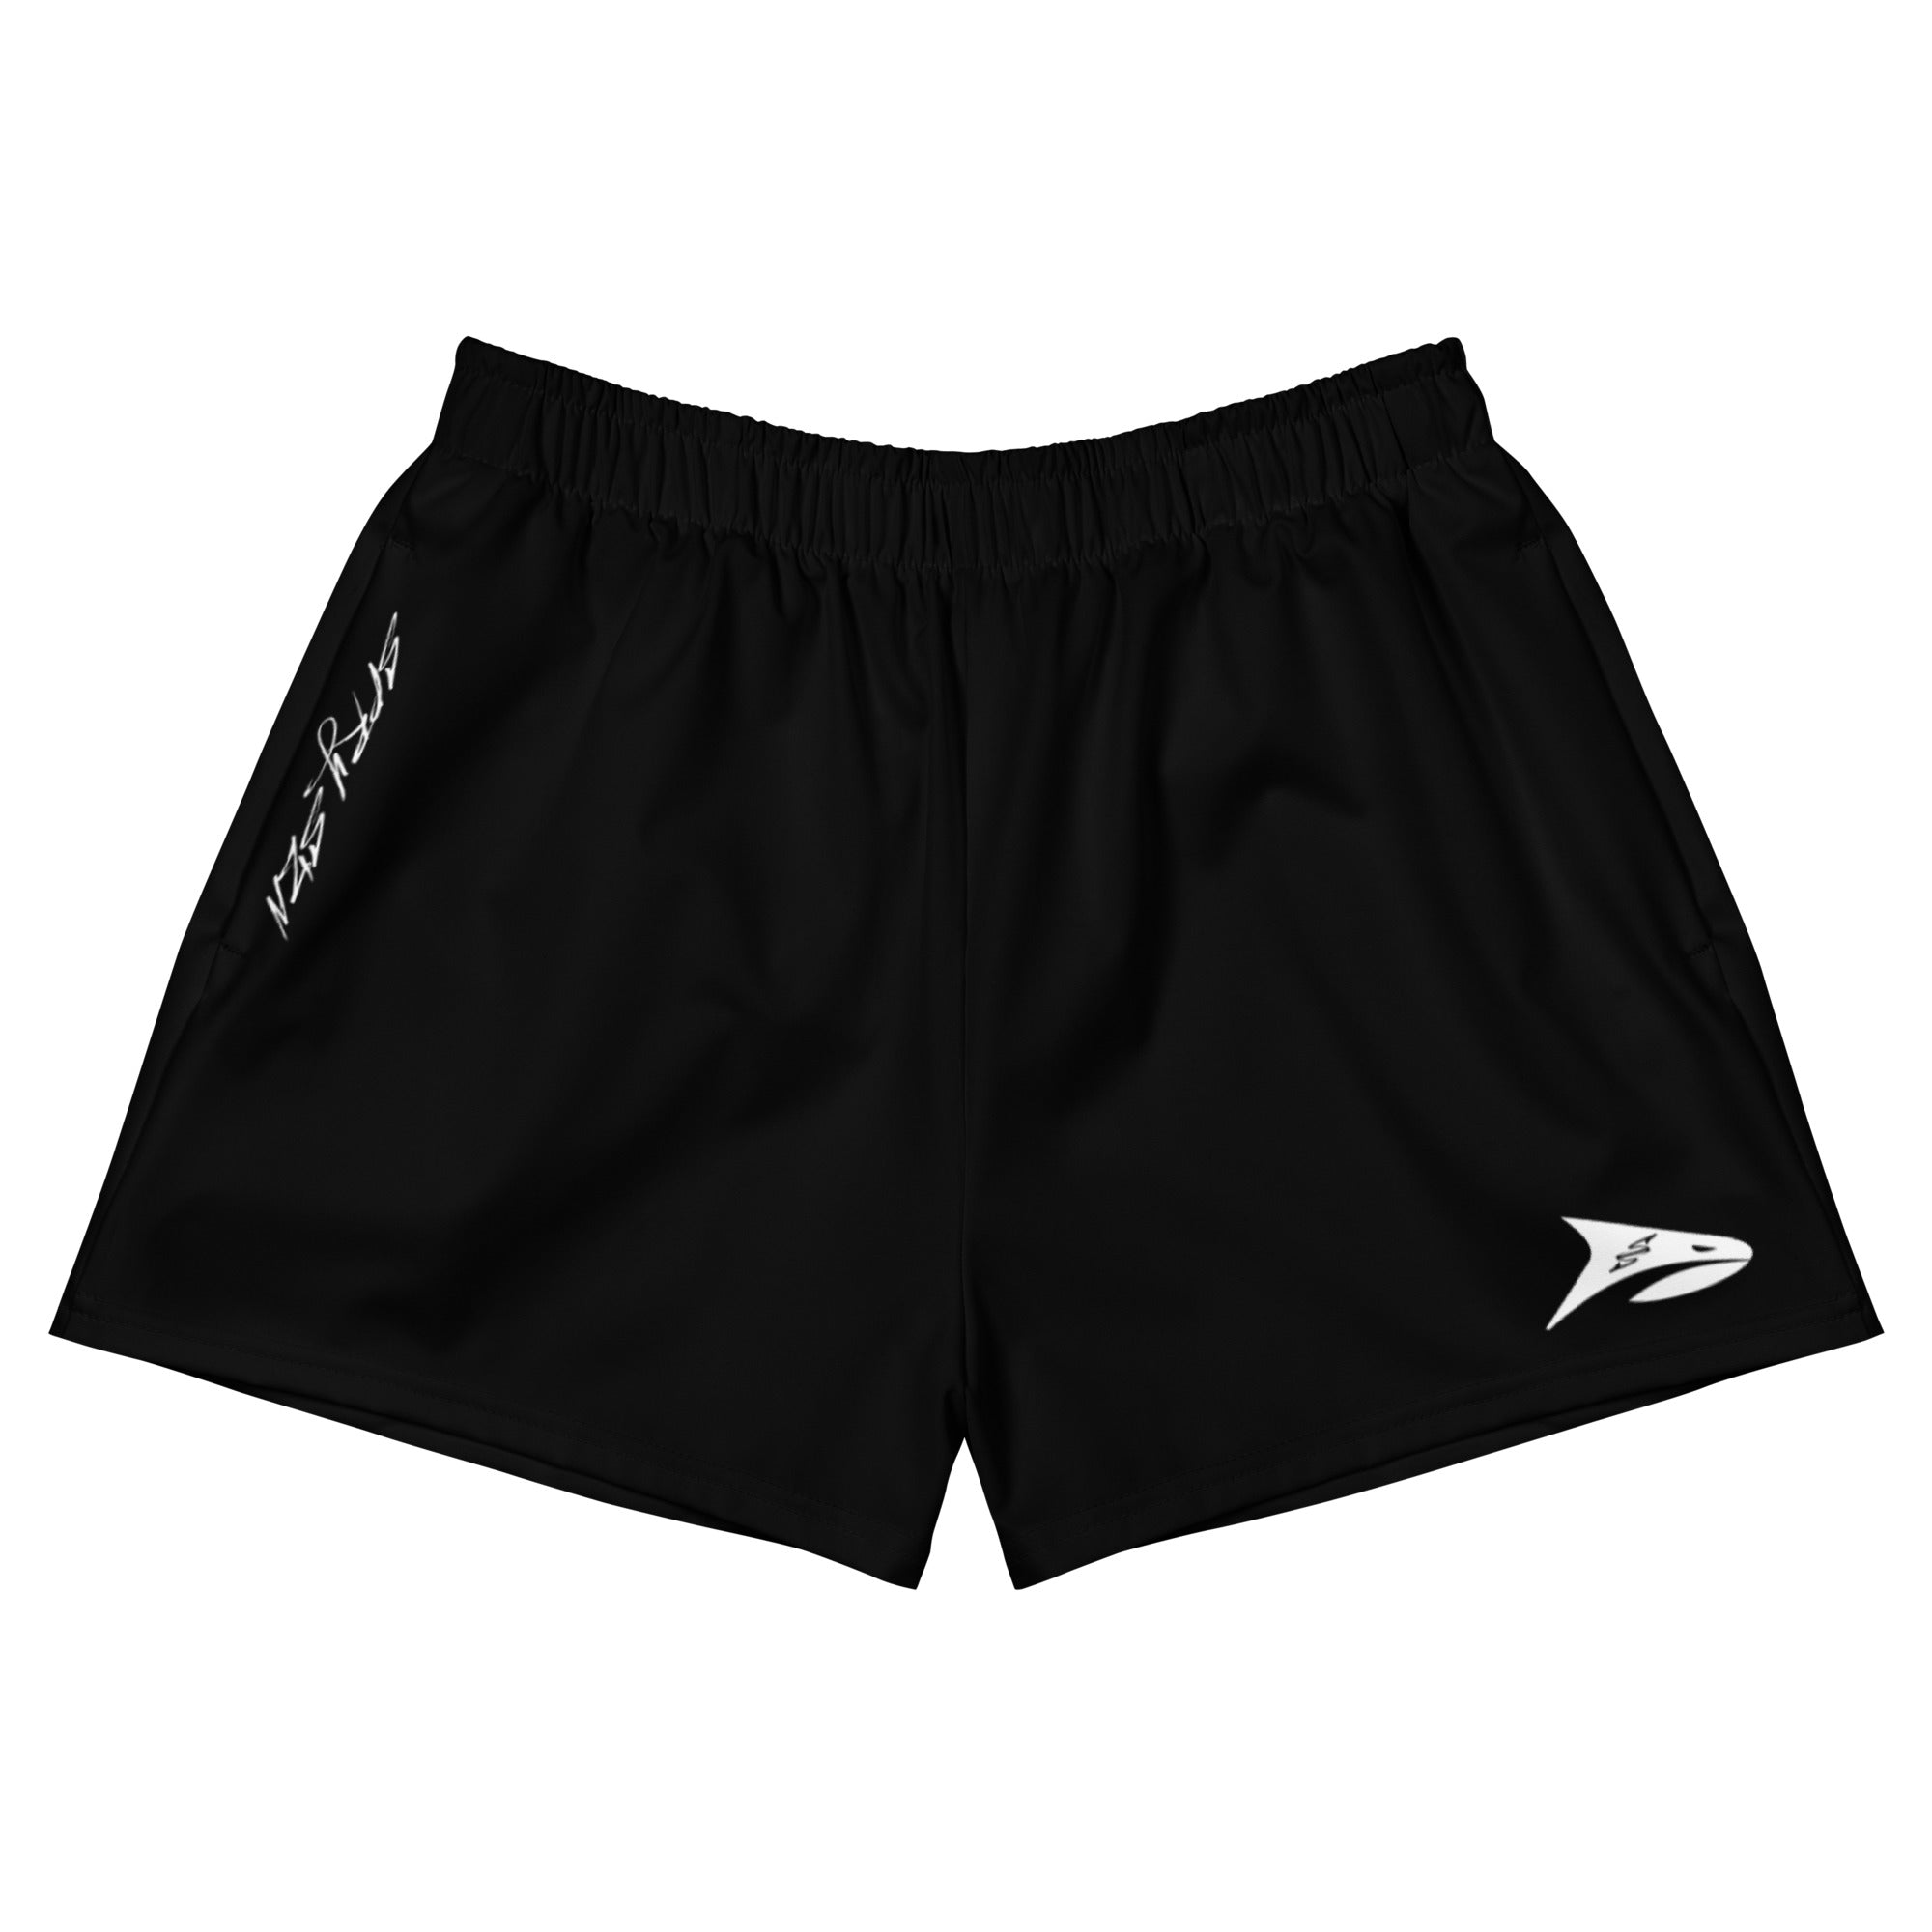 SPRY SZN White Shark Women's Black Athletic Shorts